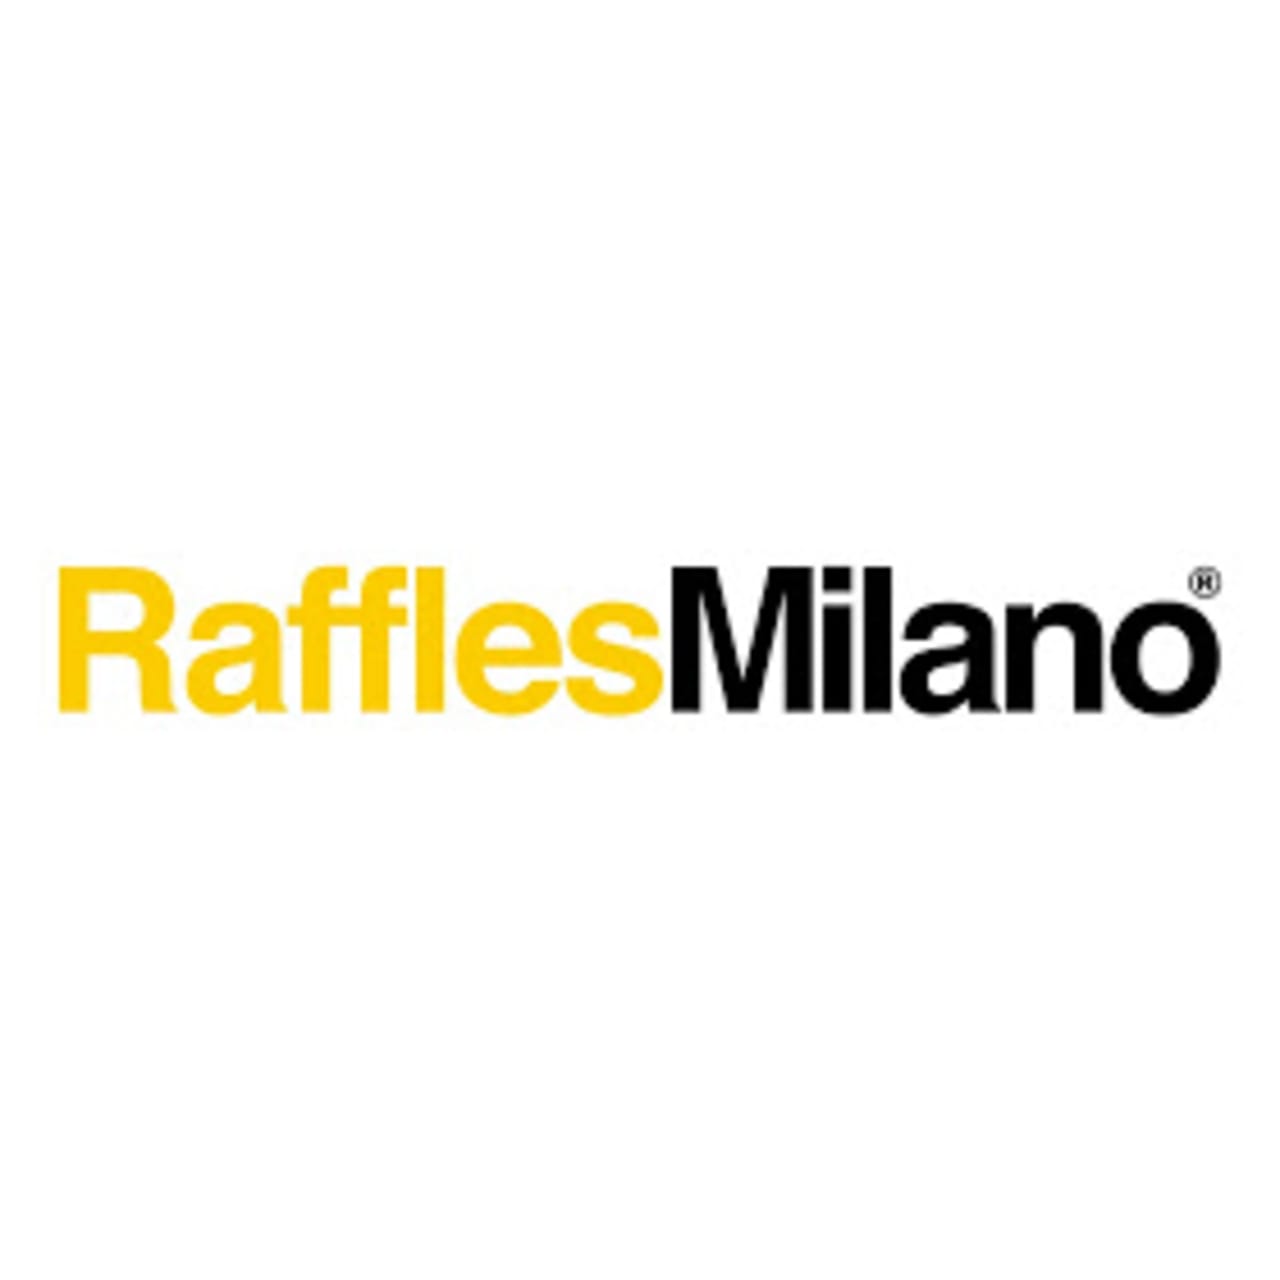 Raffles Milan - International Fashion and Design School Three year course in Product Design